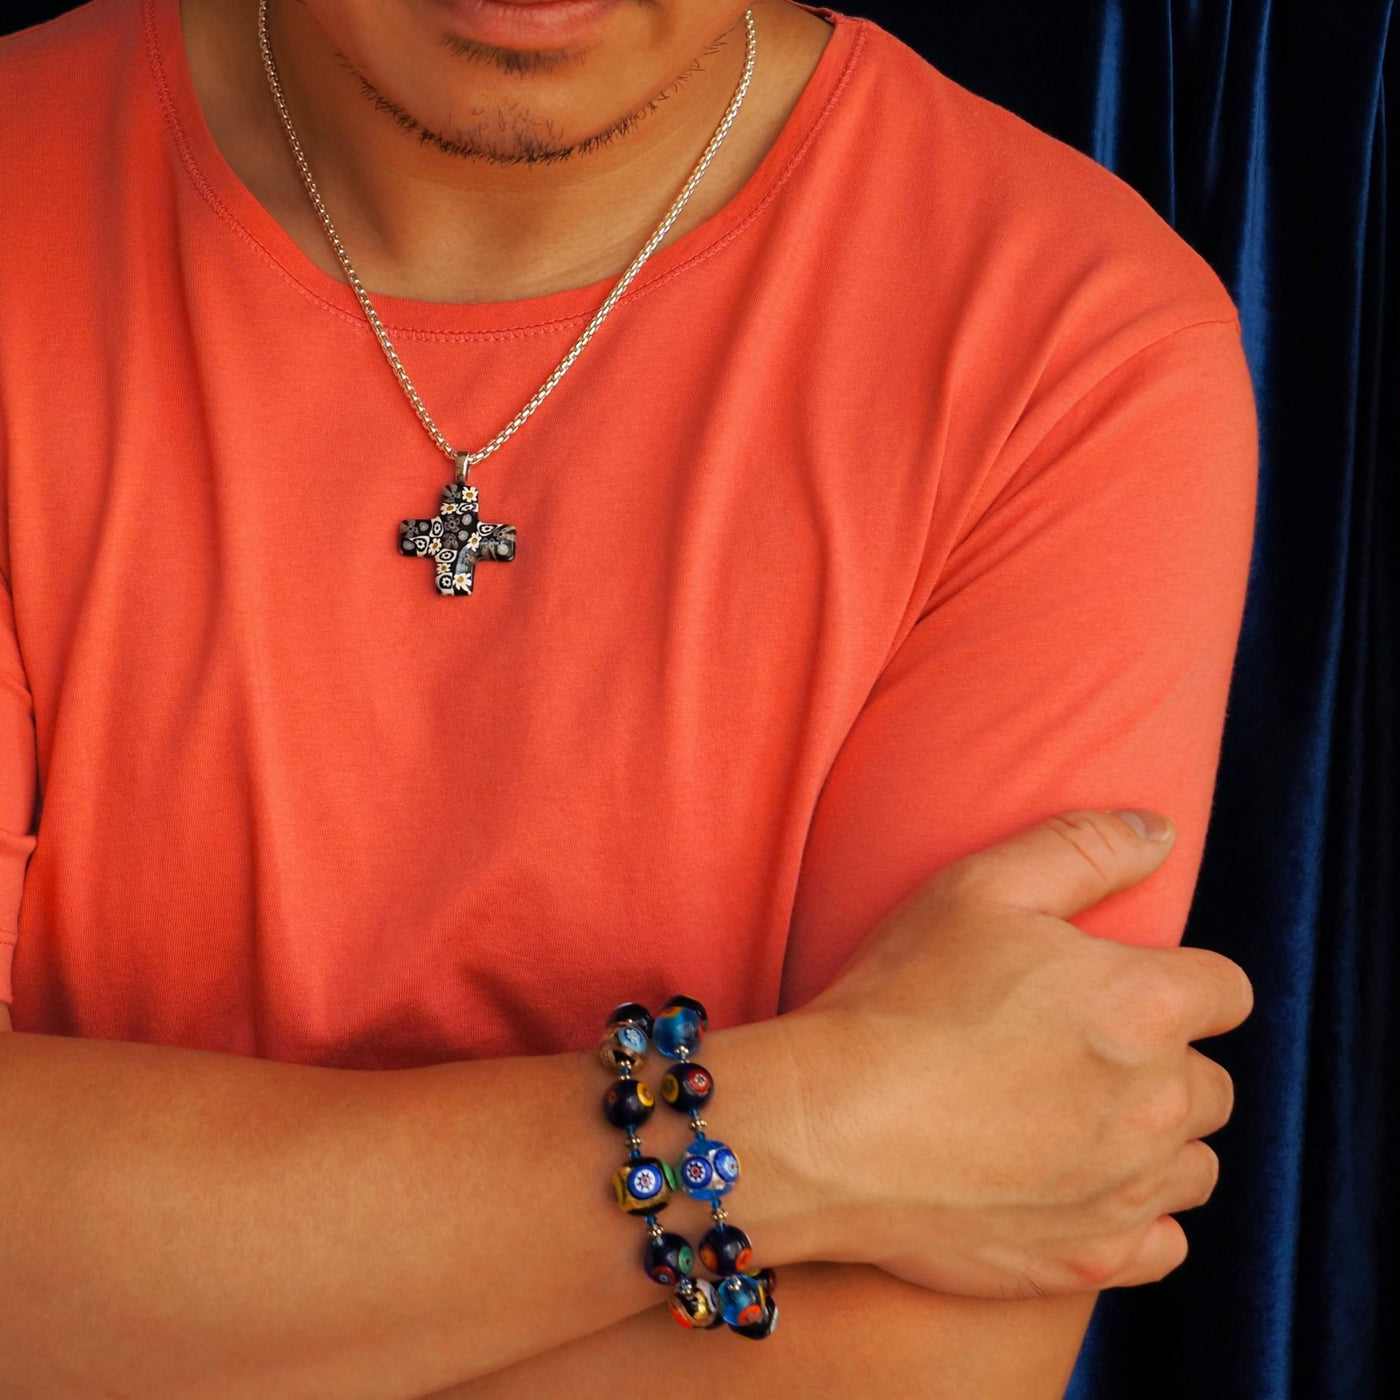 Artylish x Greek Cross Necklace - Leather - Pendant Necklace